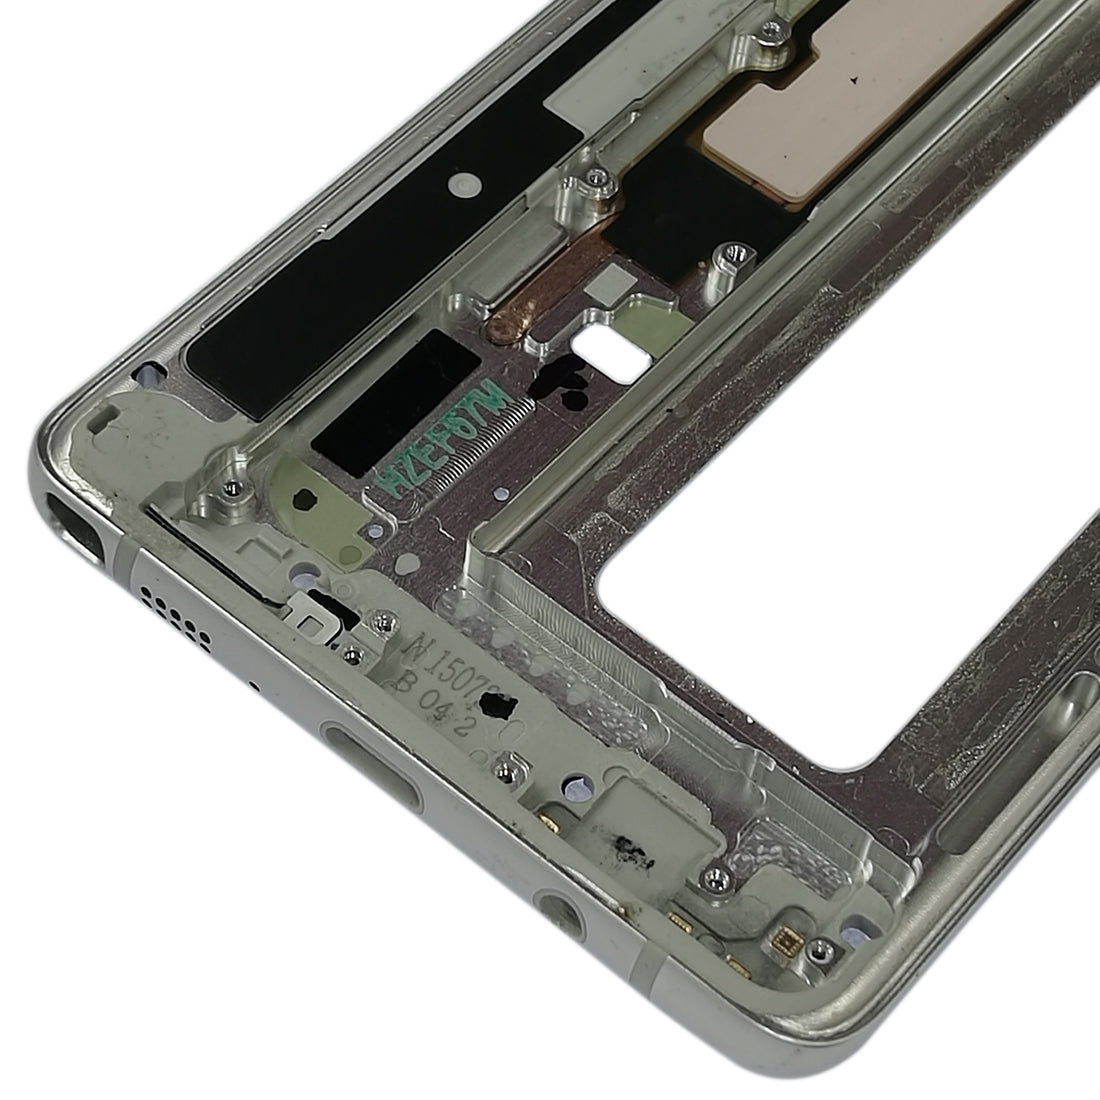 Chasis Marco Intermedio LCD Samsung Galaxy Note FE N935 N935F DS N935S Plateado